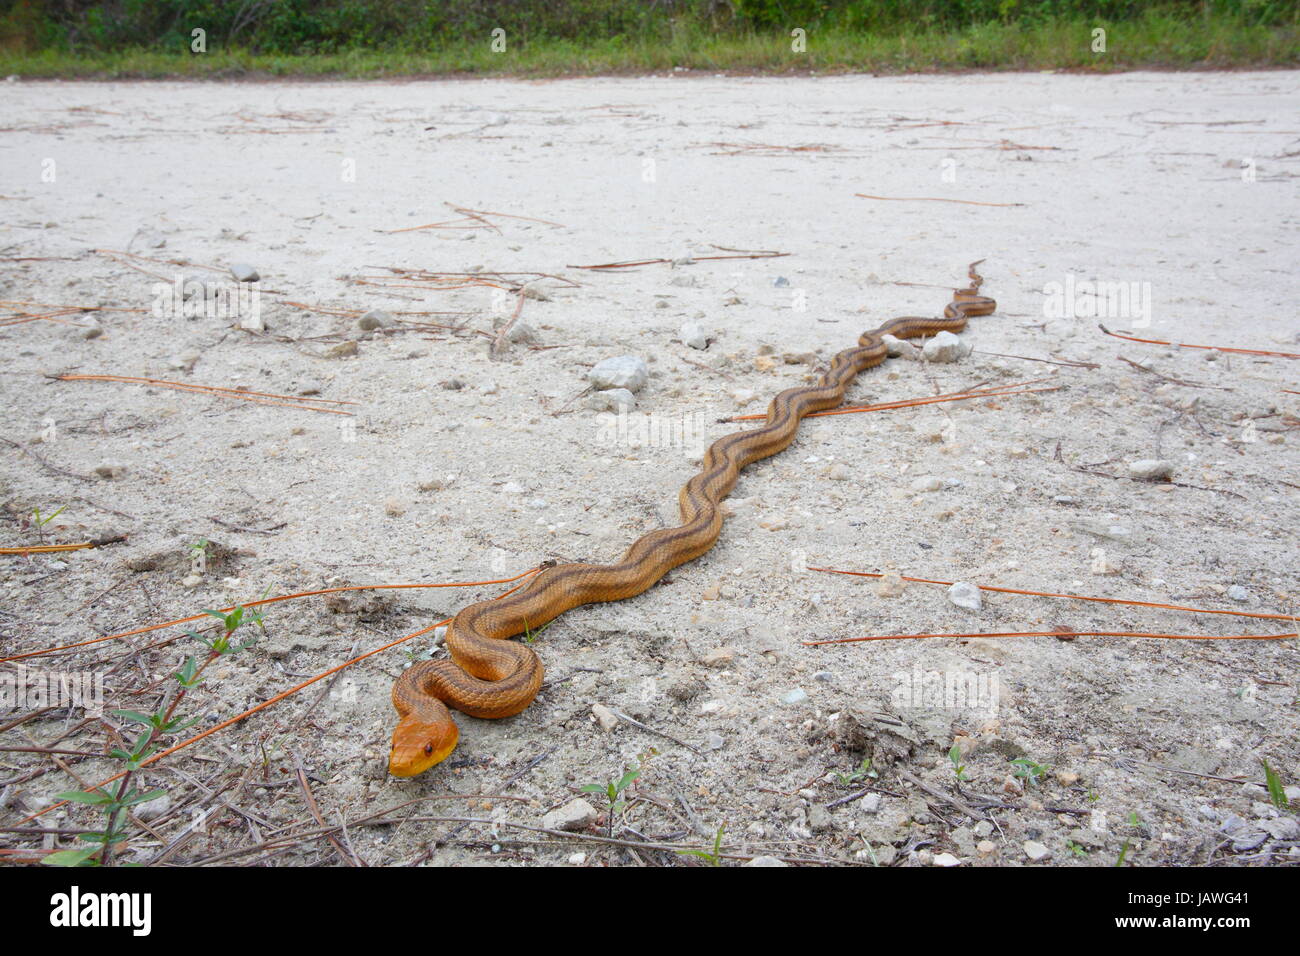 A yellow rat snake, Pantherophis obsoleta quadrivittata. Stock Photo